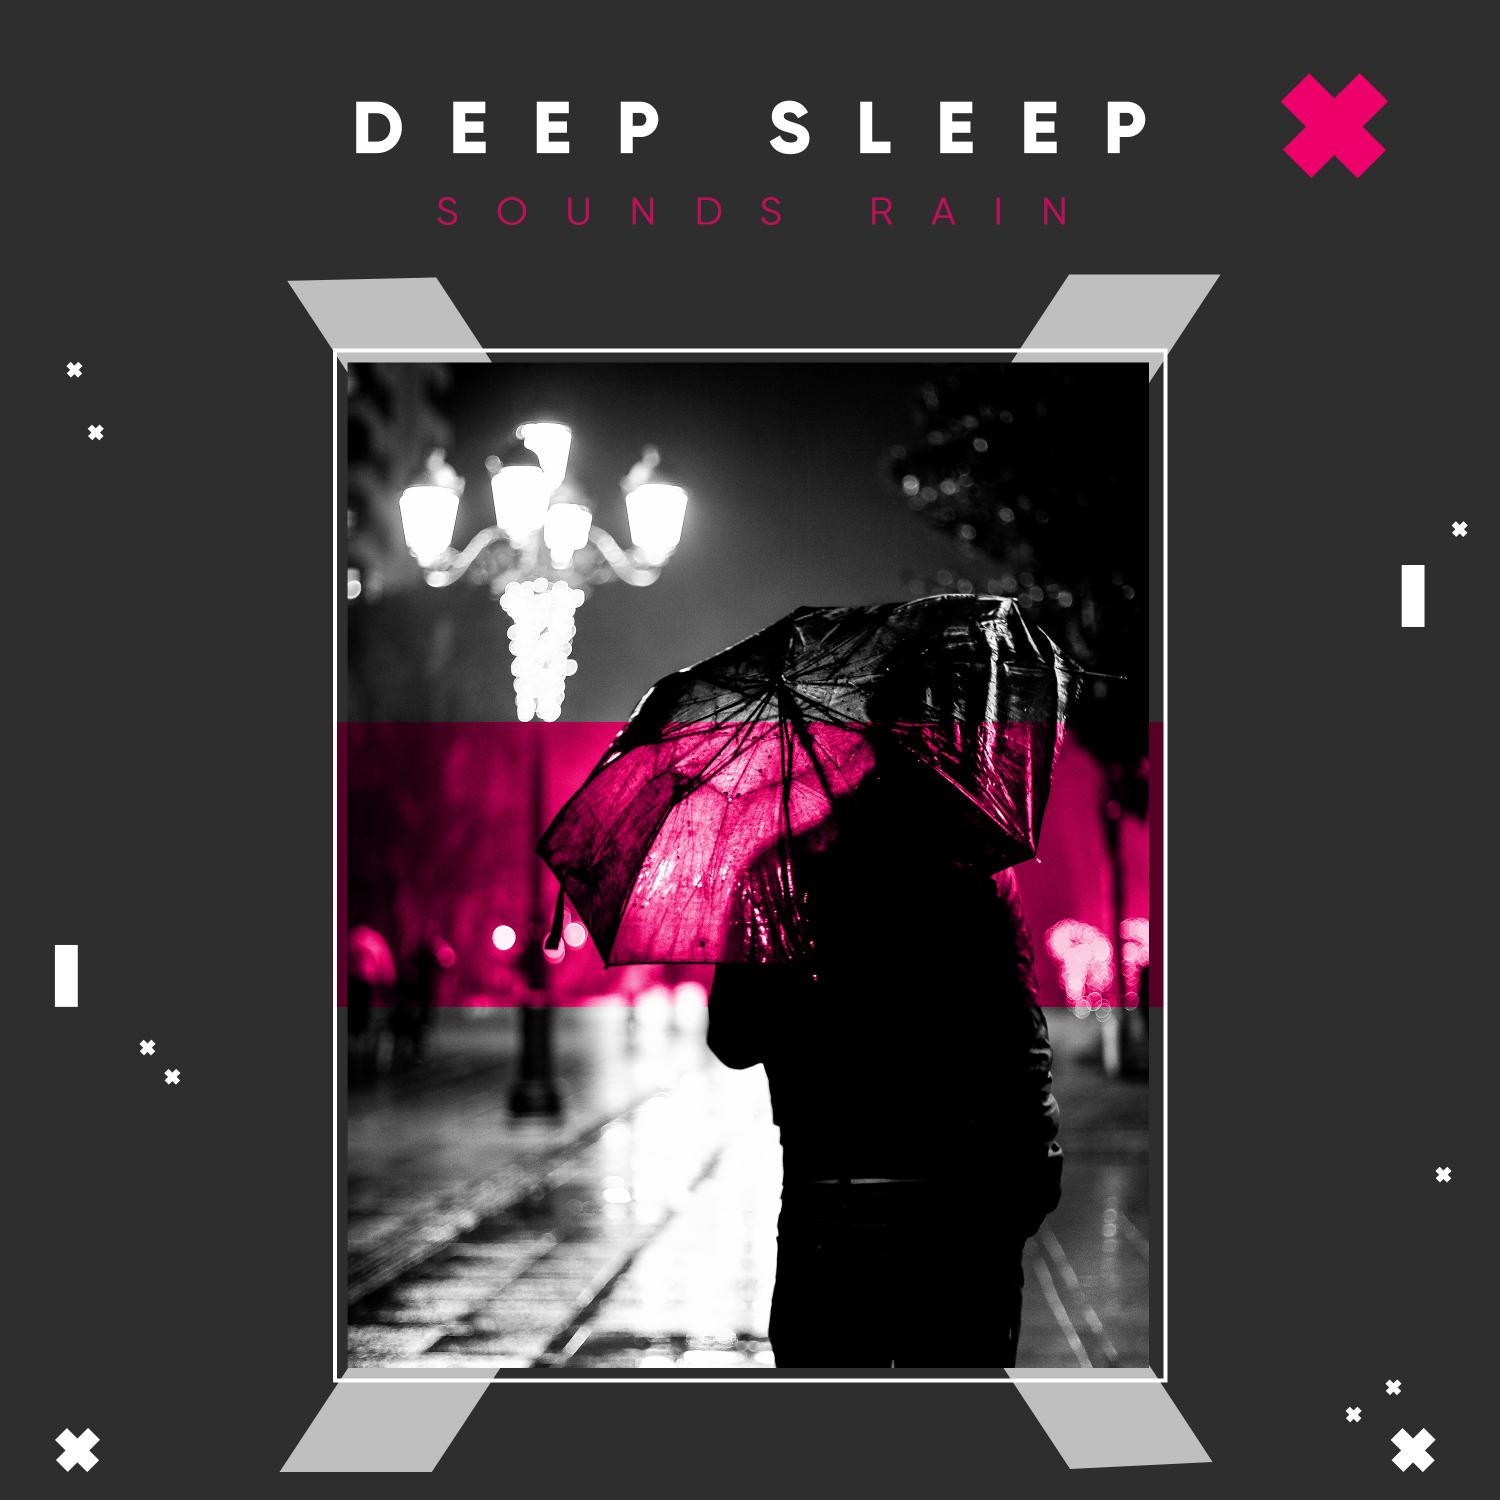 13 Meditation Relaxation Sounds - Deep Sleep Rain Music